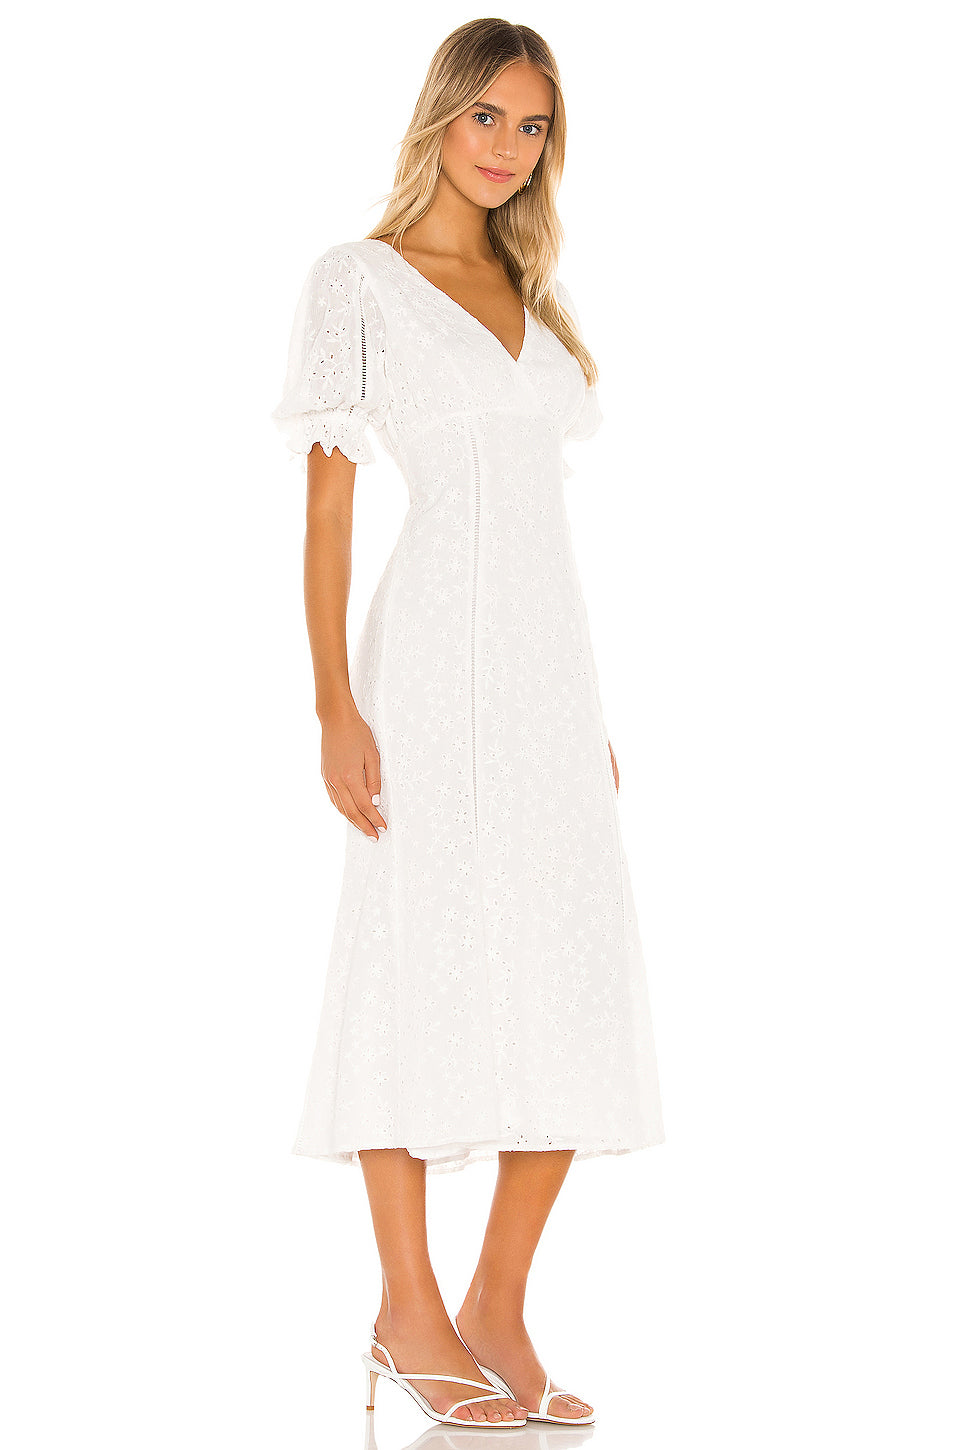 Rosabella Dress in WHITE